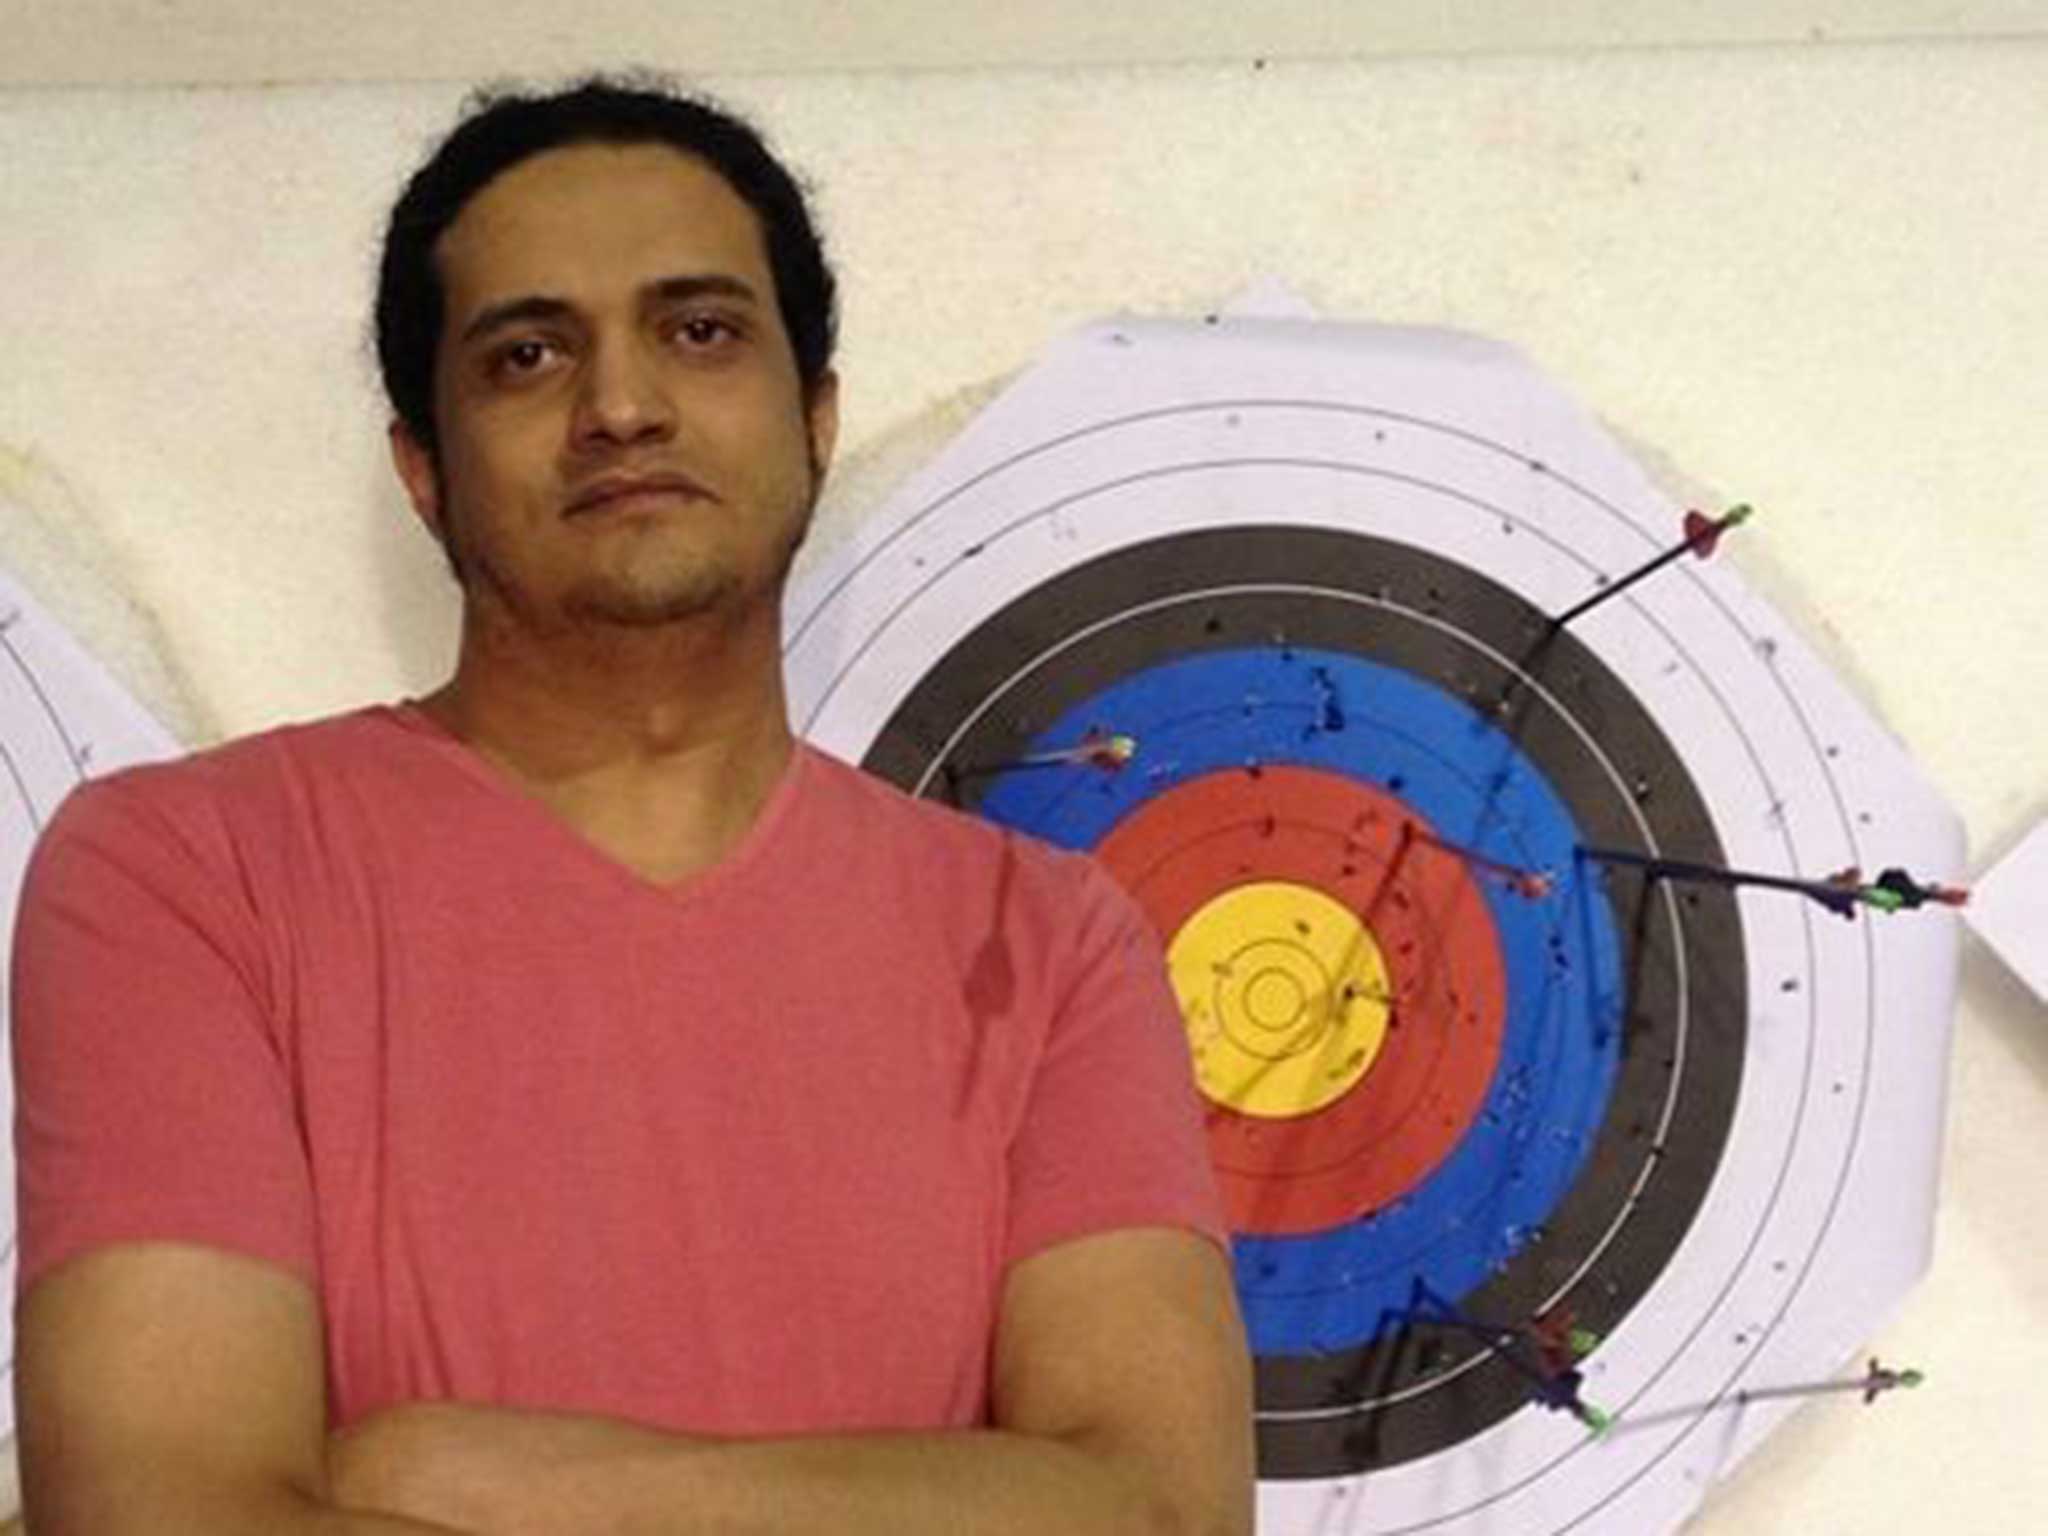 Ashraf Fayadh, a 35-year-old Palestinian poet, was sentenced to death for apostasy